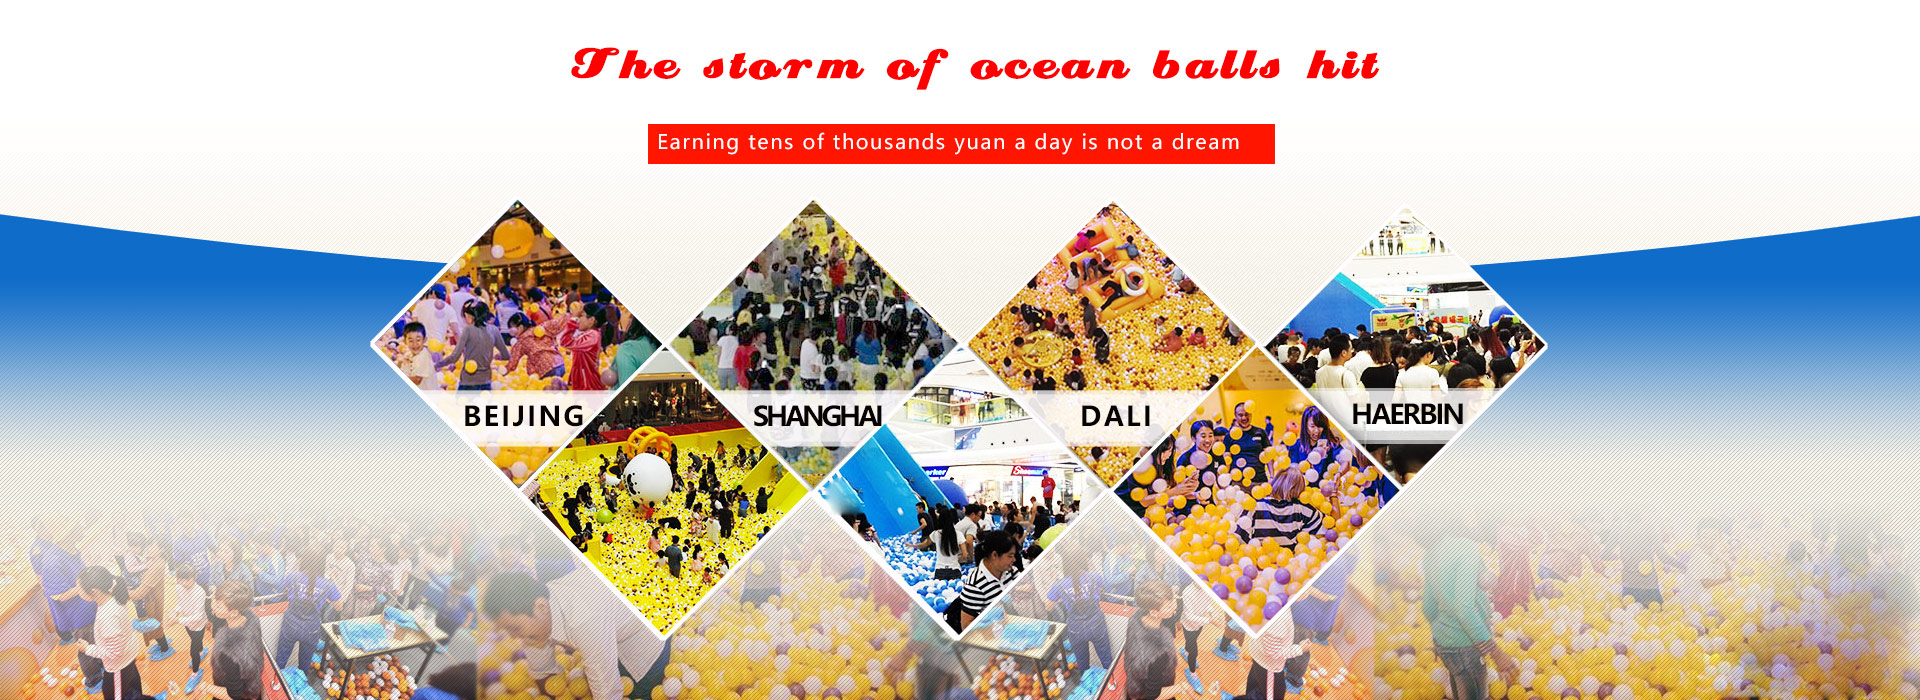 ocean balls